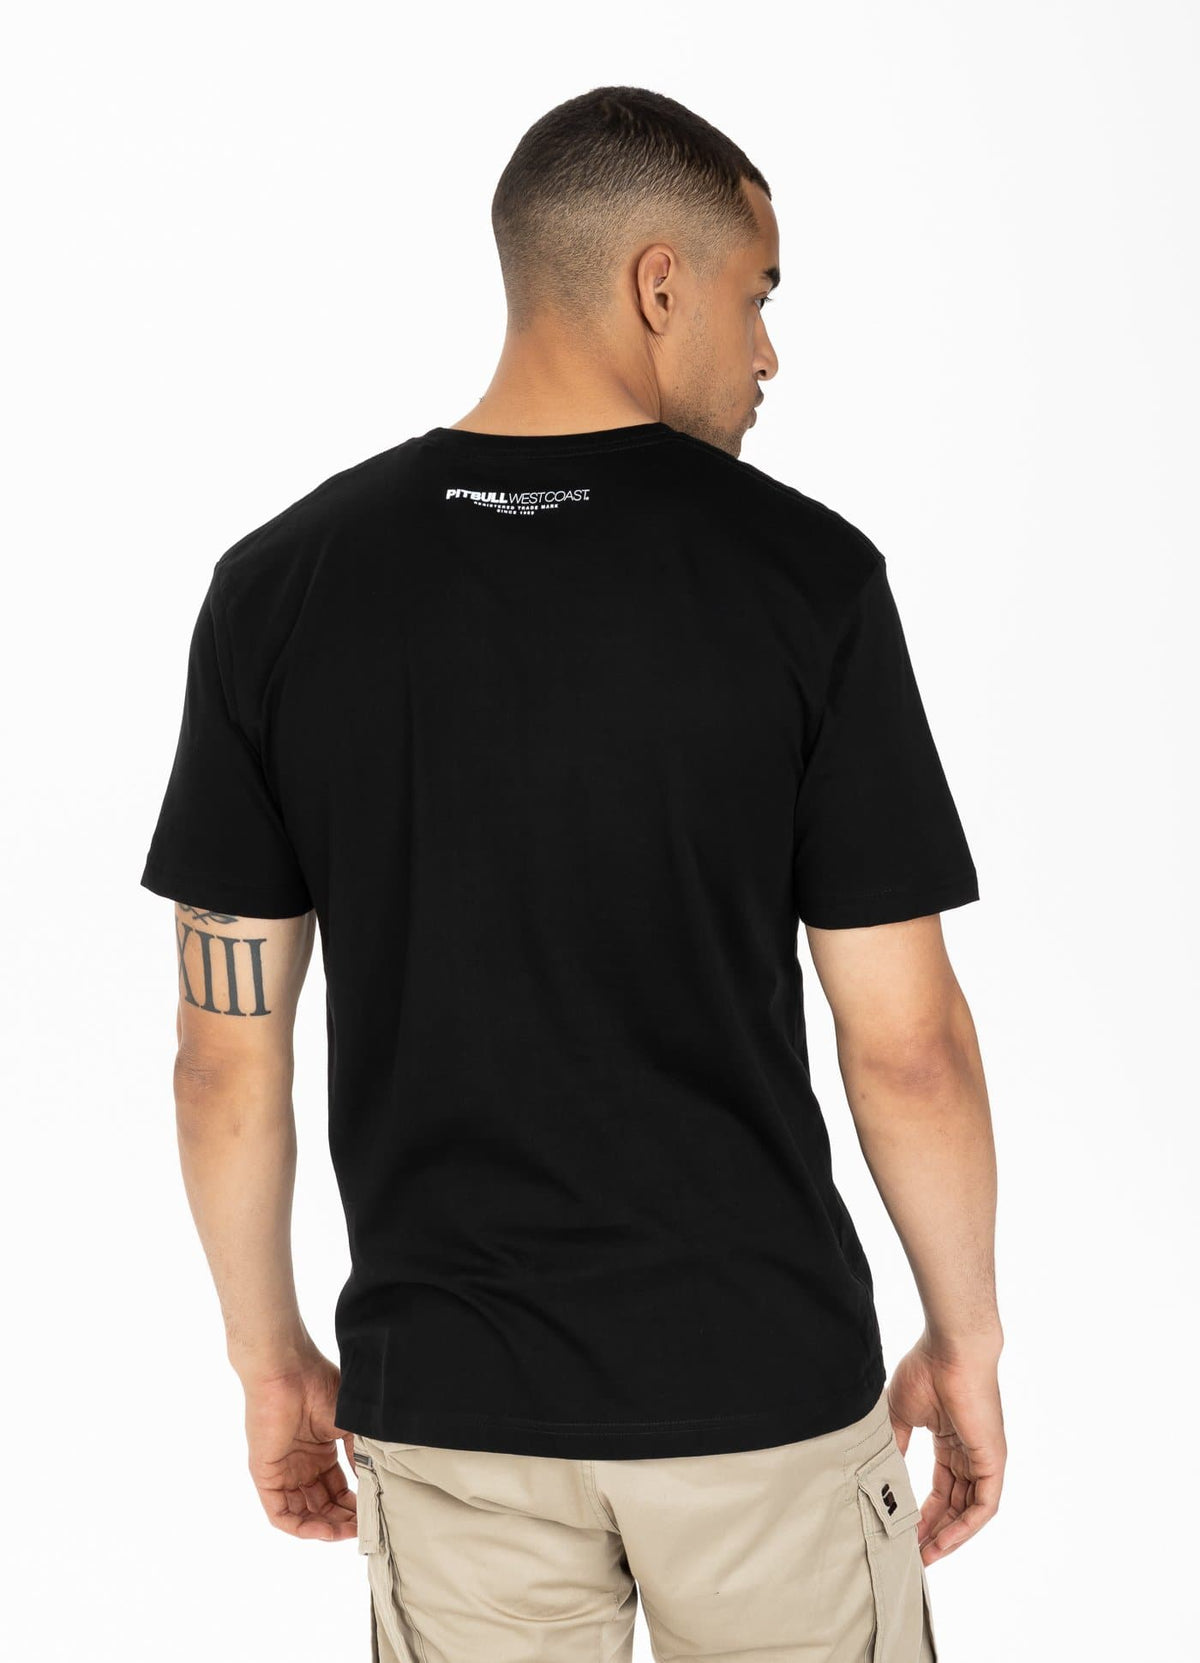 T-shirt CLASSIC LOGO Black - Pitbull West Coast International Store 